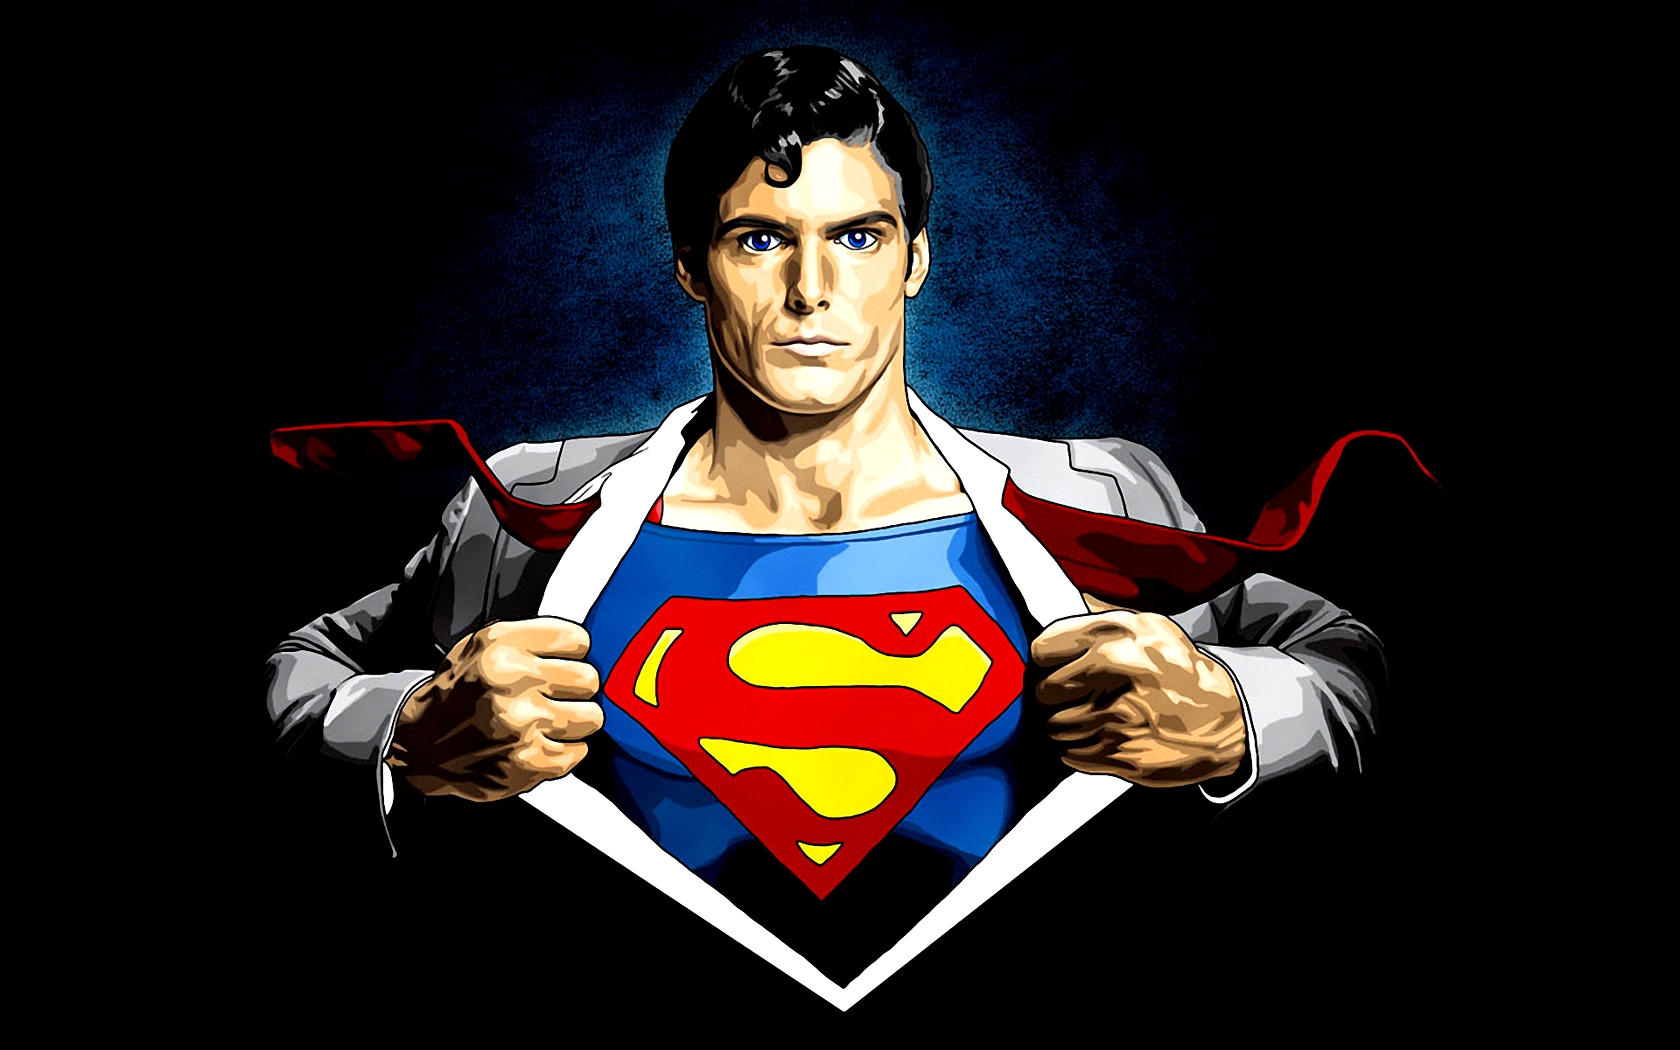 Cartoon Superman Logo Wallpaper 1680x1050 | Download wallpapers page